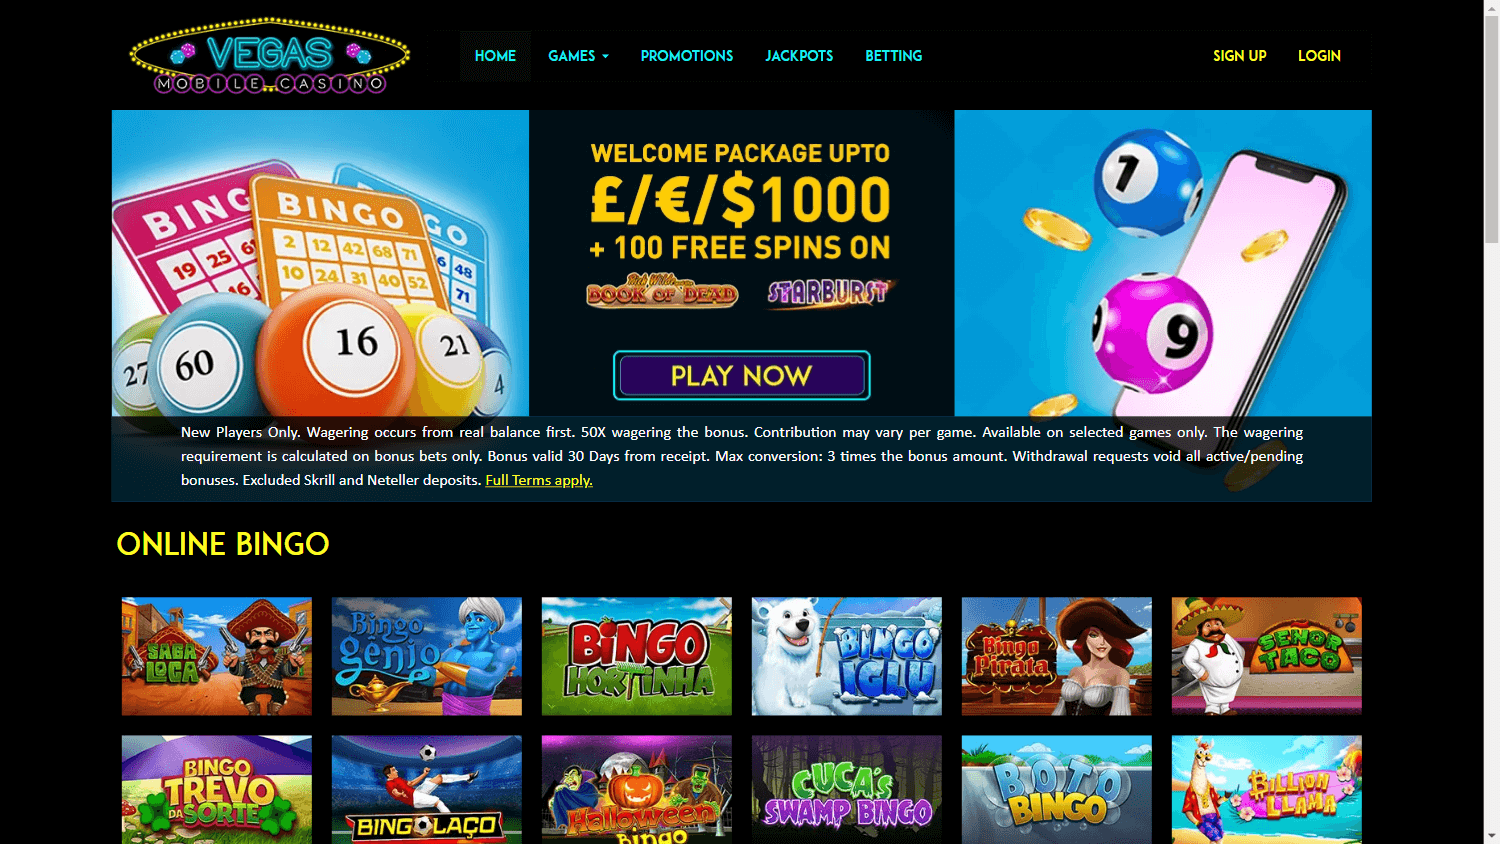 vegas_mobile_casino_homepage_desktop